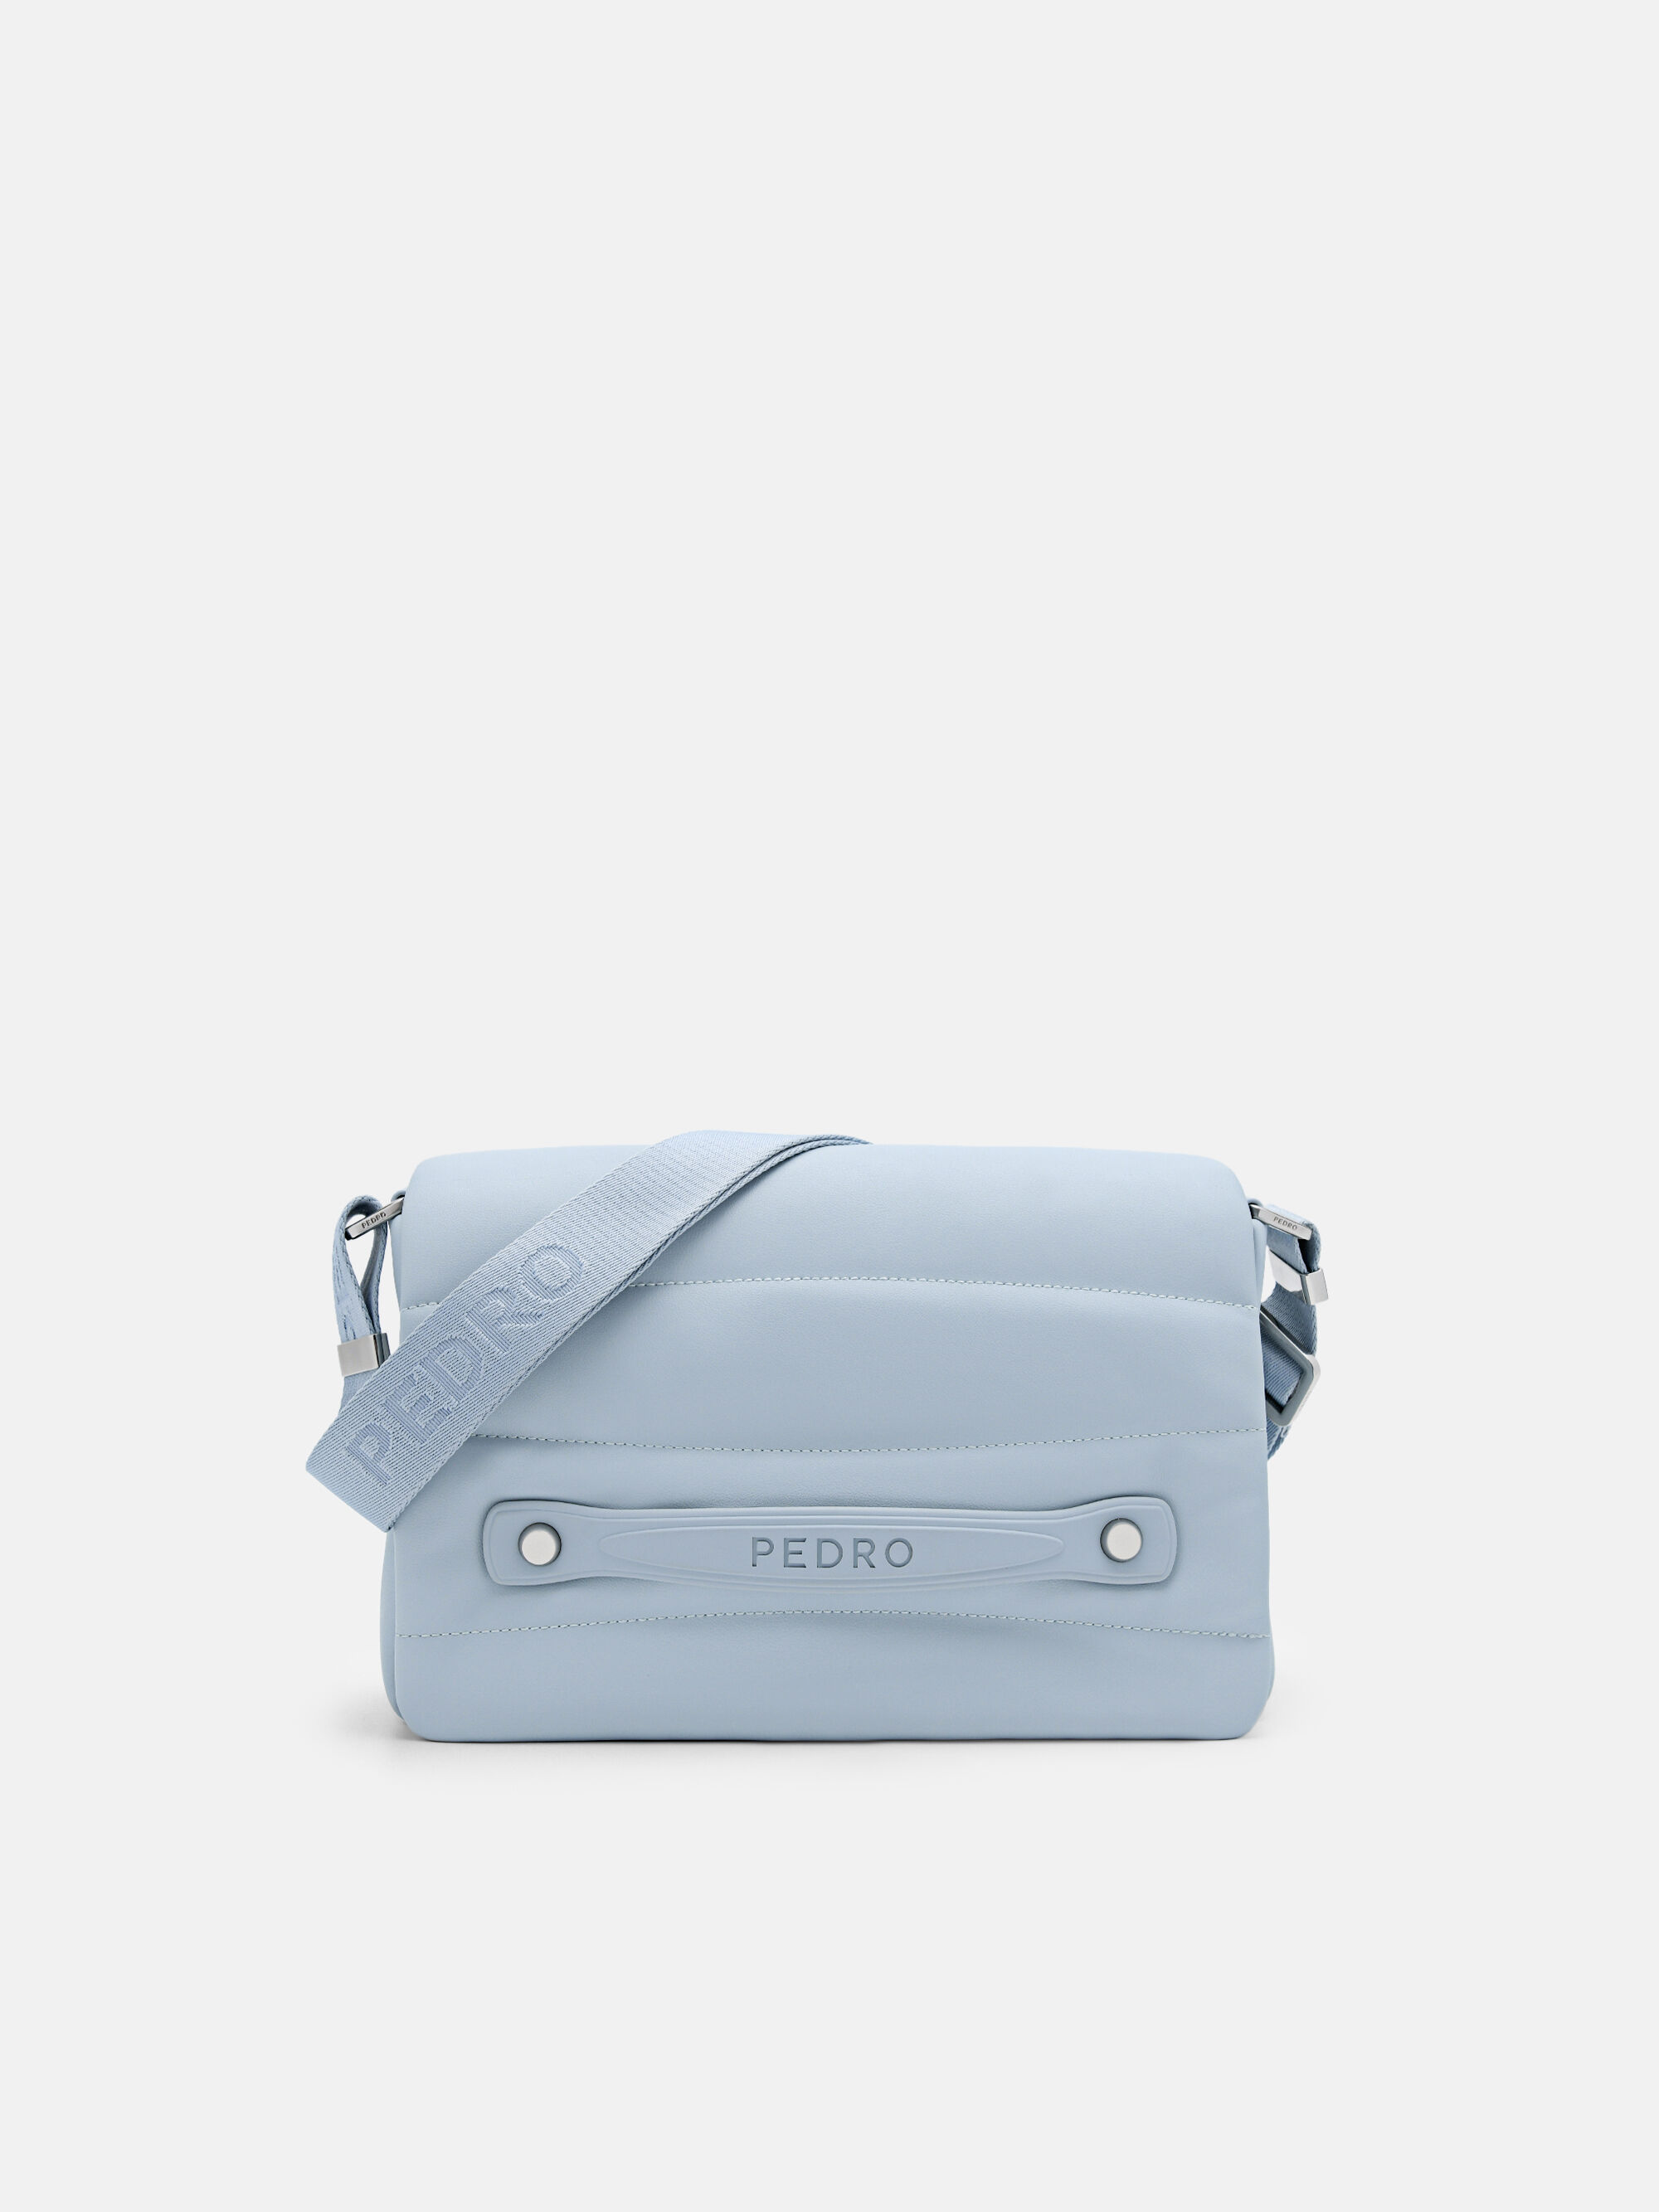 Shop Pedro Street Style 2WAY Crossbody Bag Small Shoulder Bag by